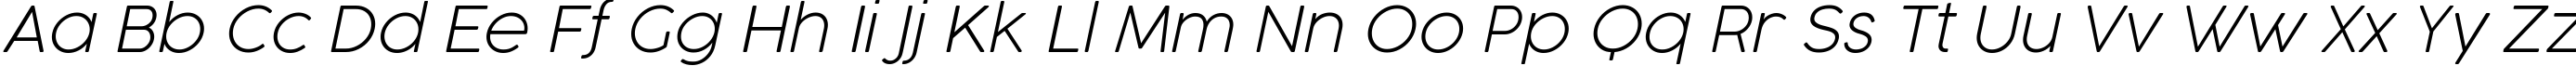 Пример написания английского алфавита шрифтом Cocogoose Pro UltraLight Italic